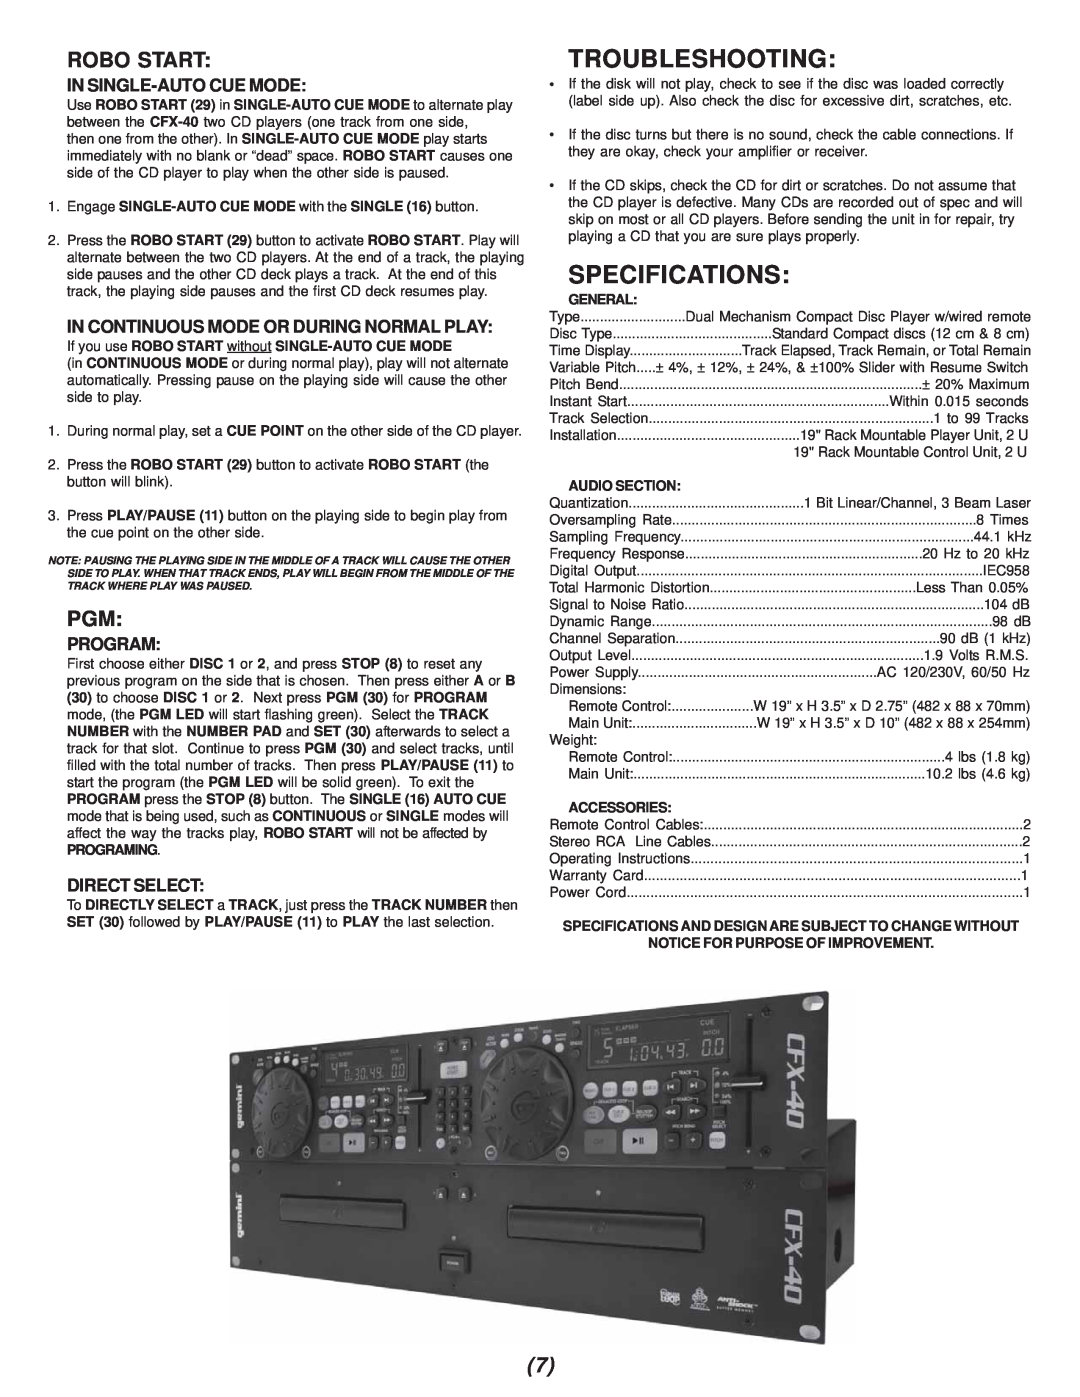 Gemini CFX-40 manual Troubleshooting, Specifications, Robo Start 